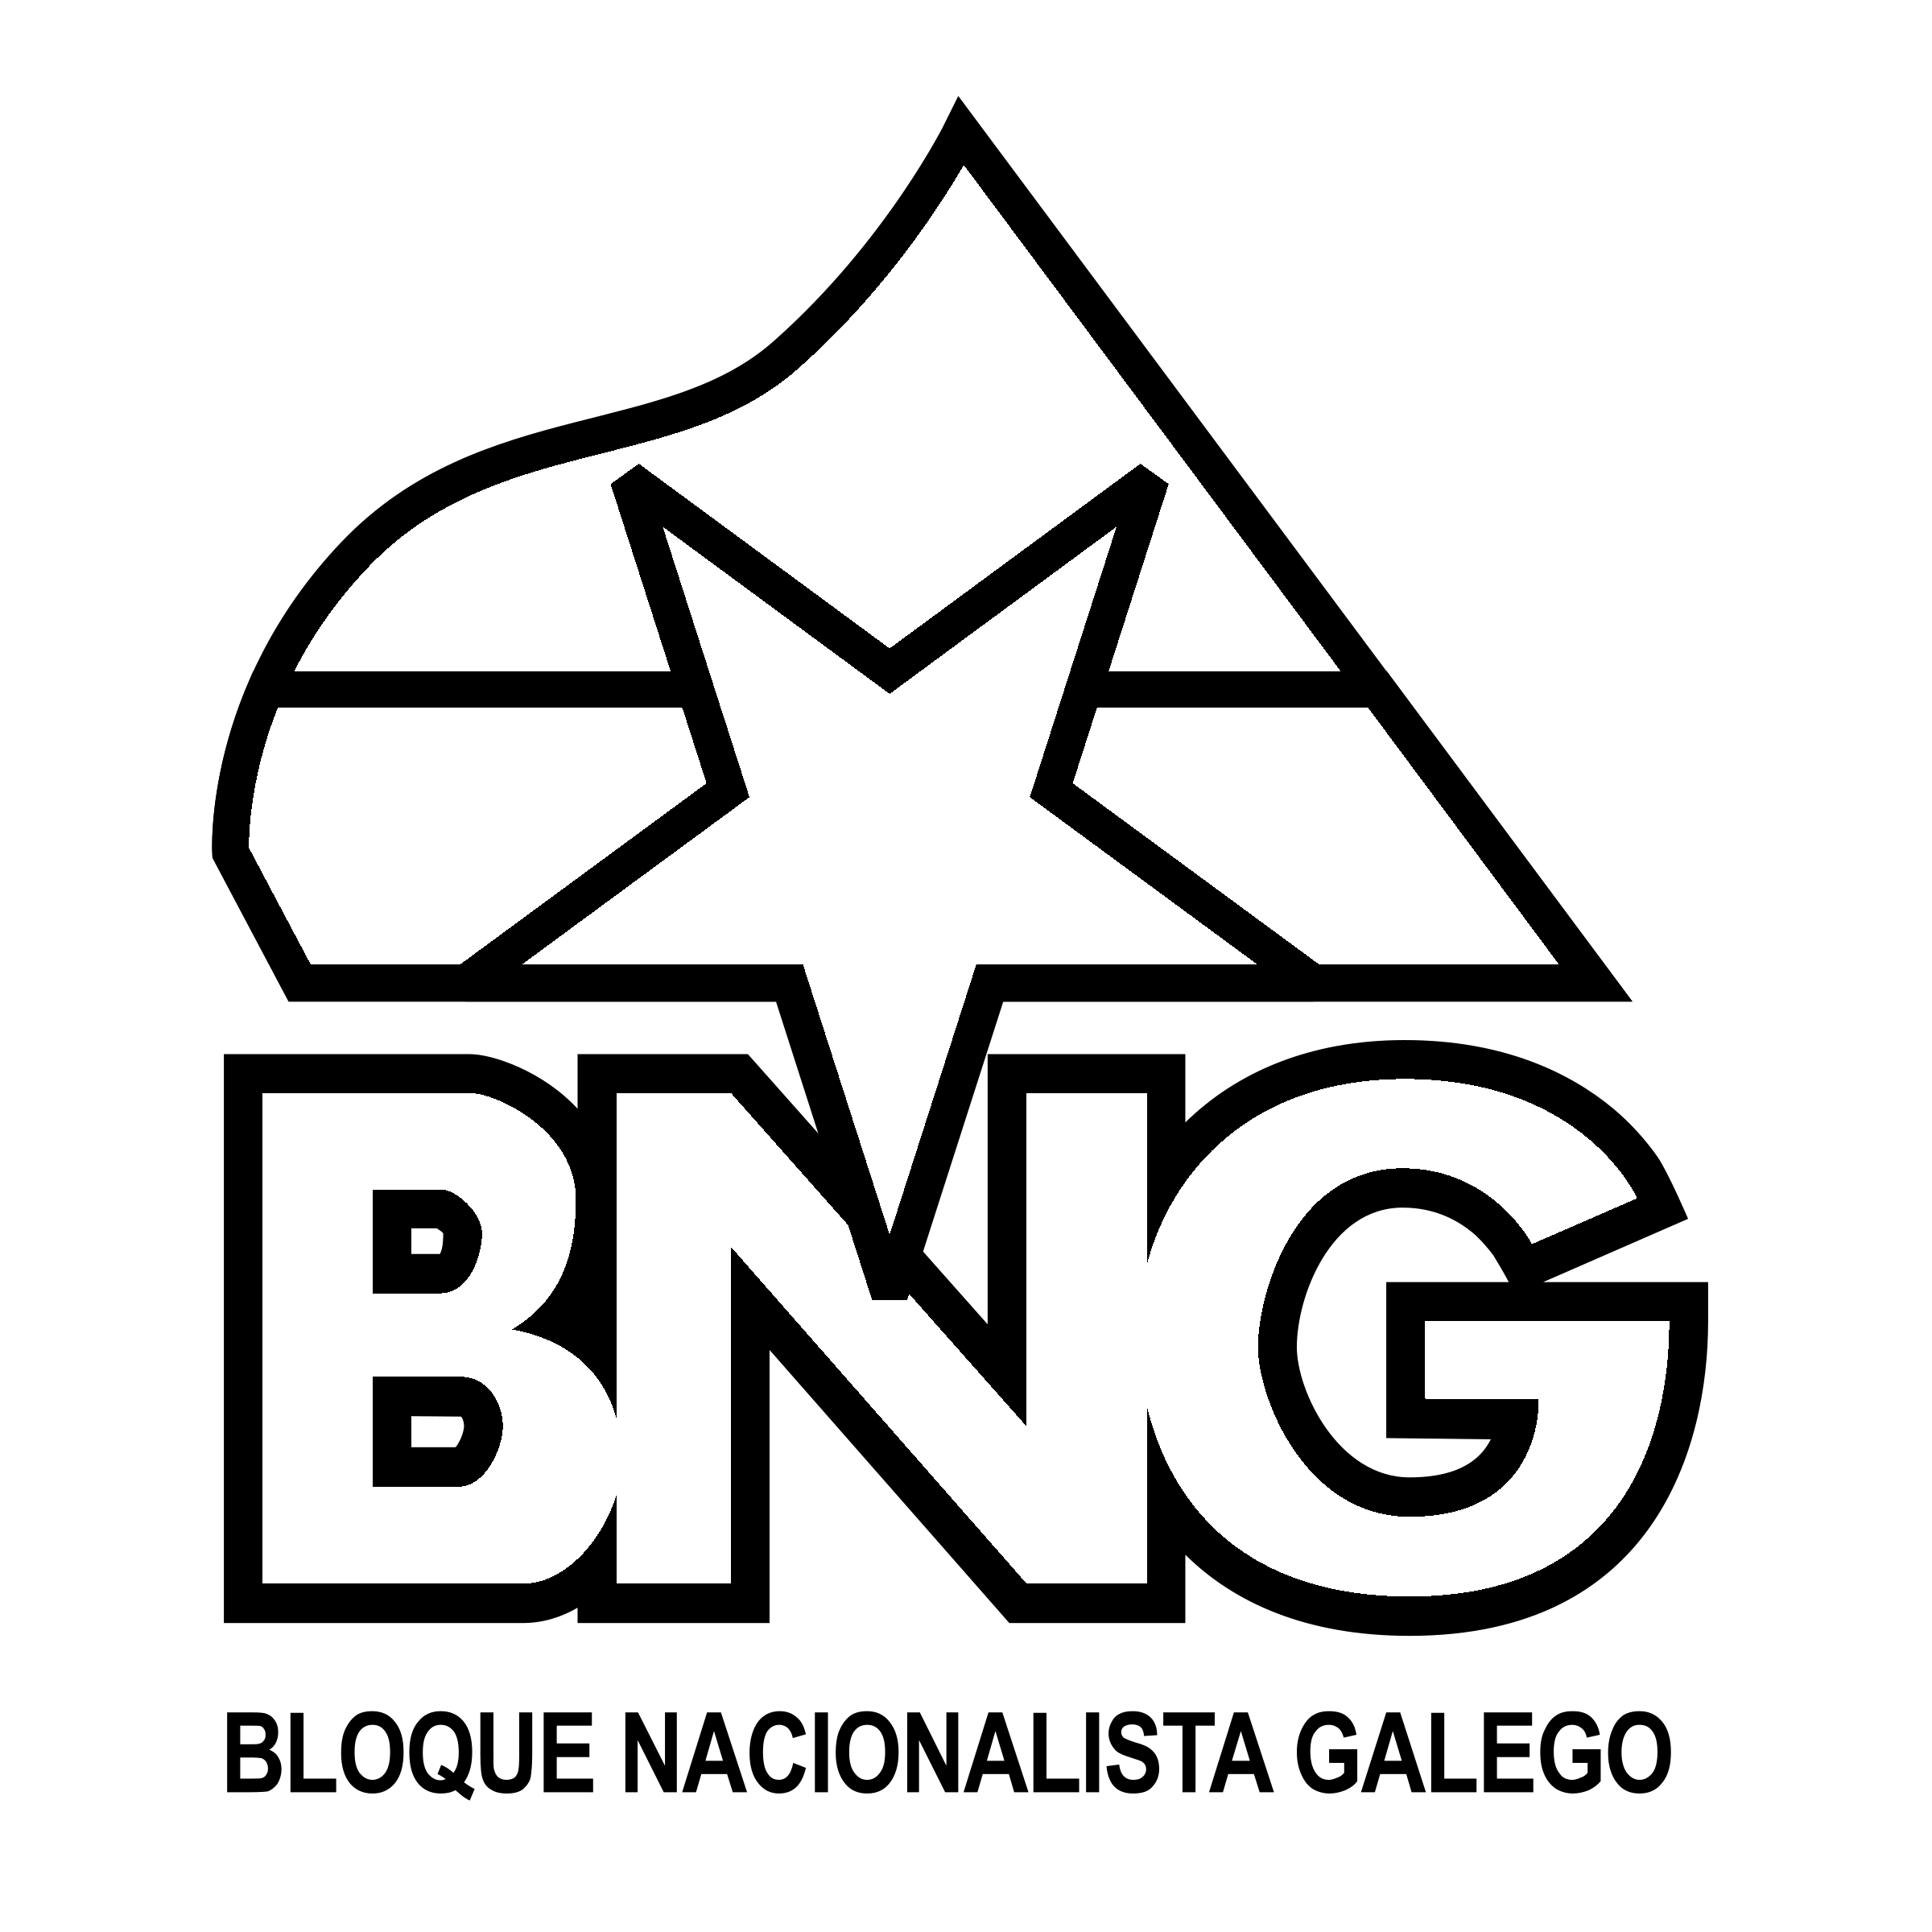 Bng Logo - BNG Logo PNG Transparent & SVG Vector - Freebie Supply